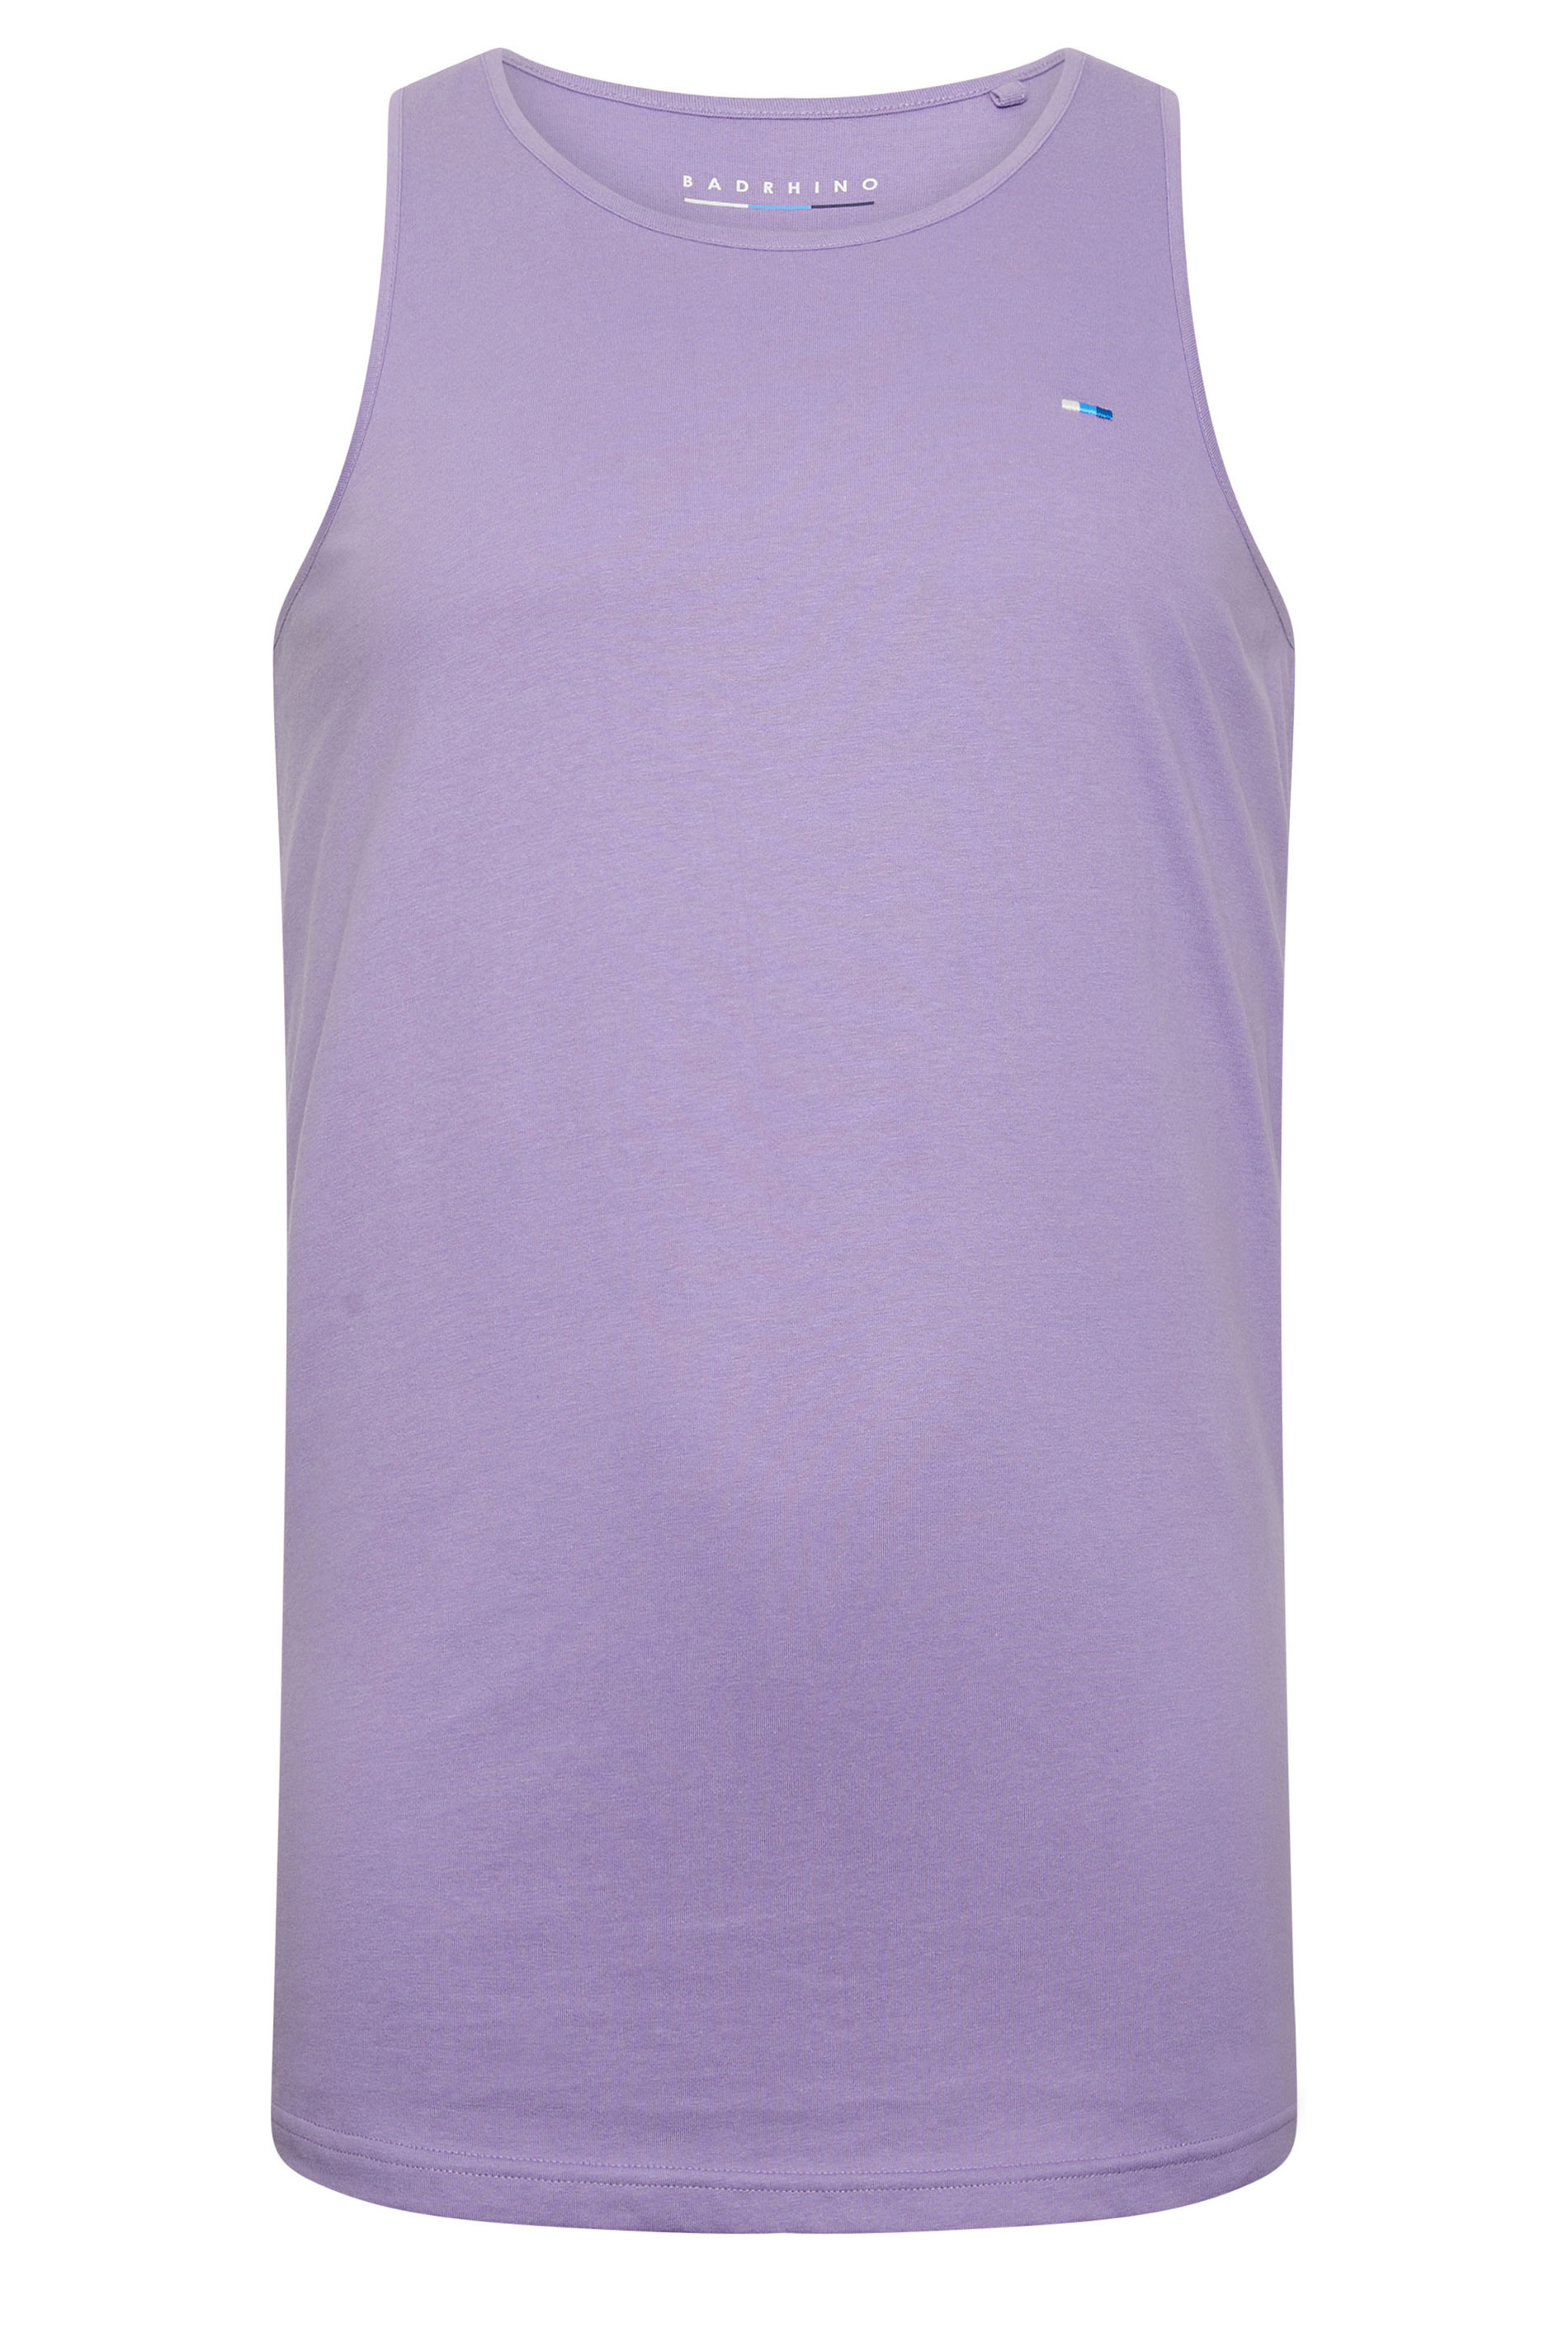 BadRhino Big & Tall Chalk Violet Purple Vest | BadRhino 3